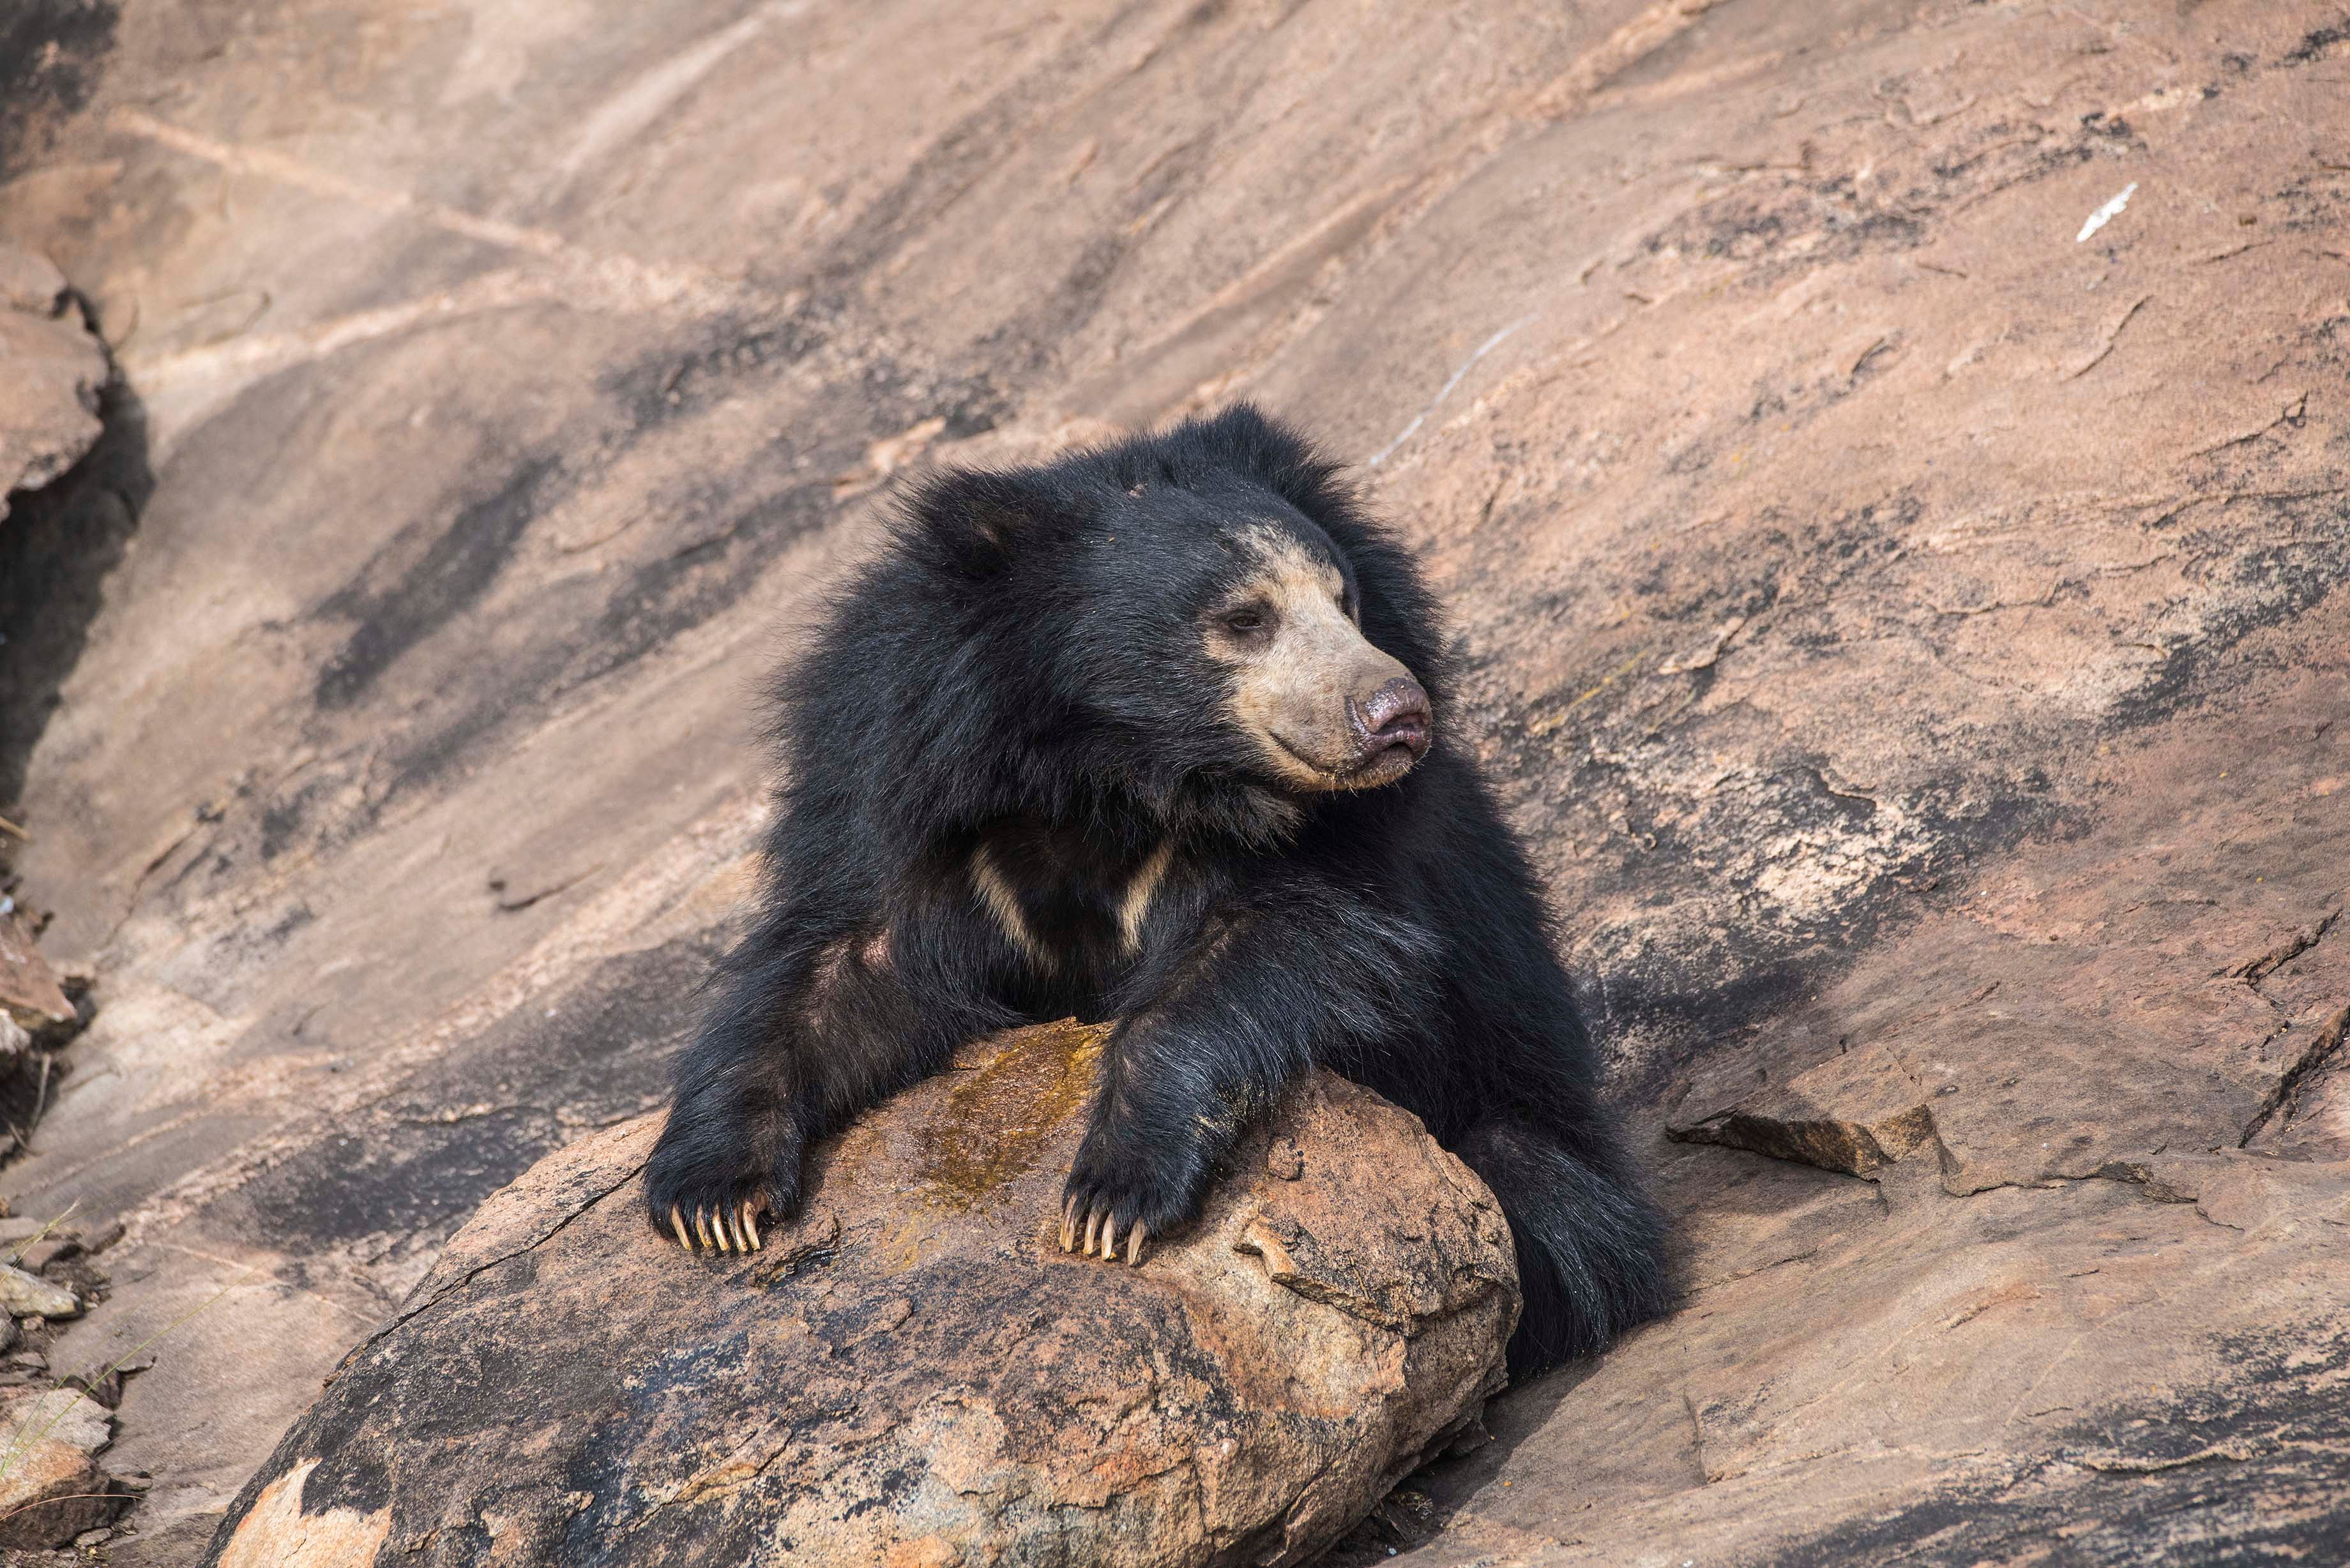 A bear in Daroji Sloth Bear Sanctuary